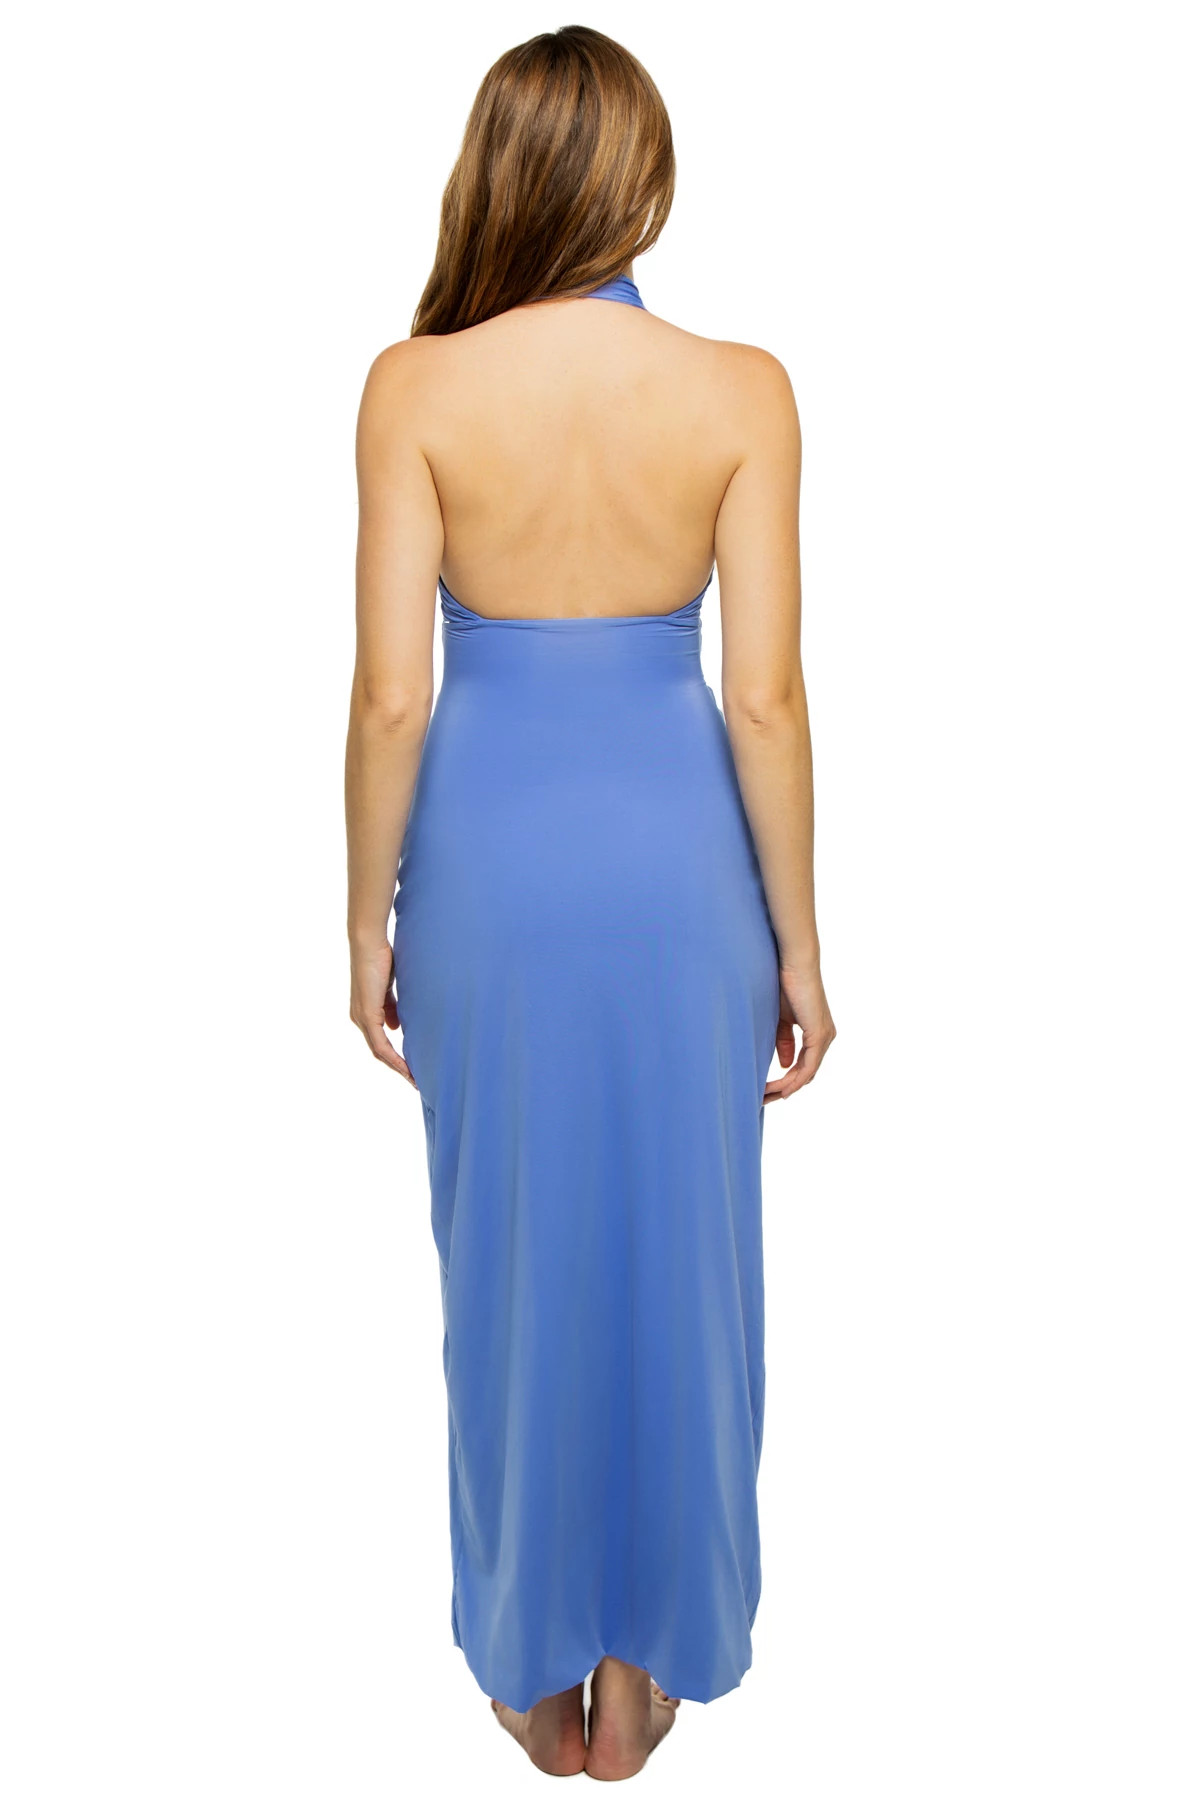 COAST BLUE Vaupes Halter Maxi Dress image number 2